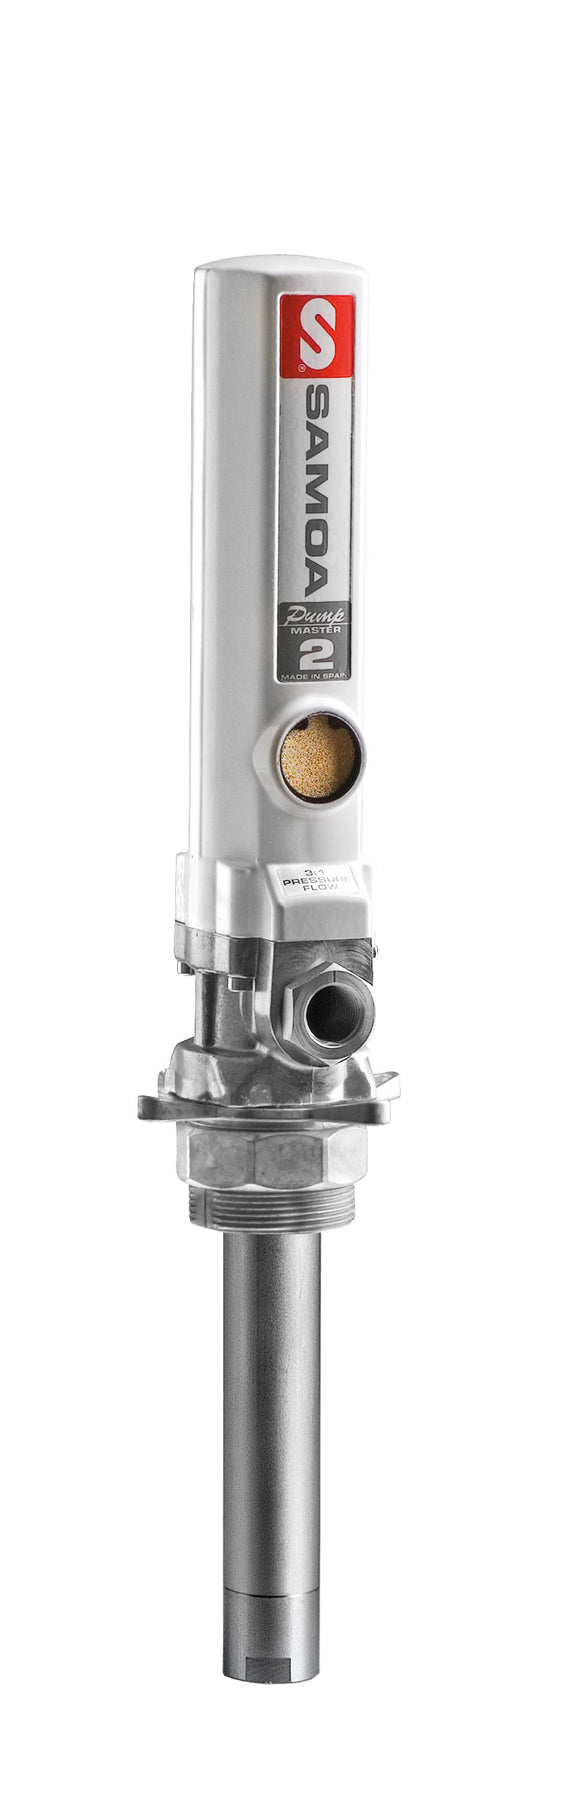 SAMOA® Pumpmaster 2, 3:1 Ratio Oil Pump - Universal Stub Pump 